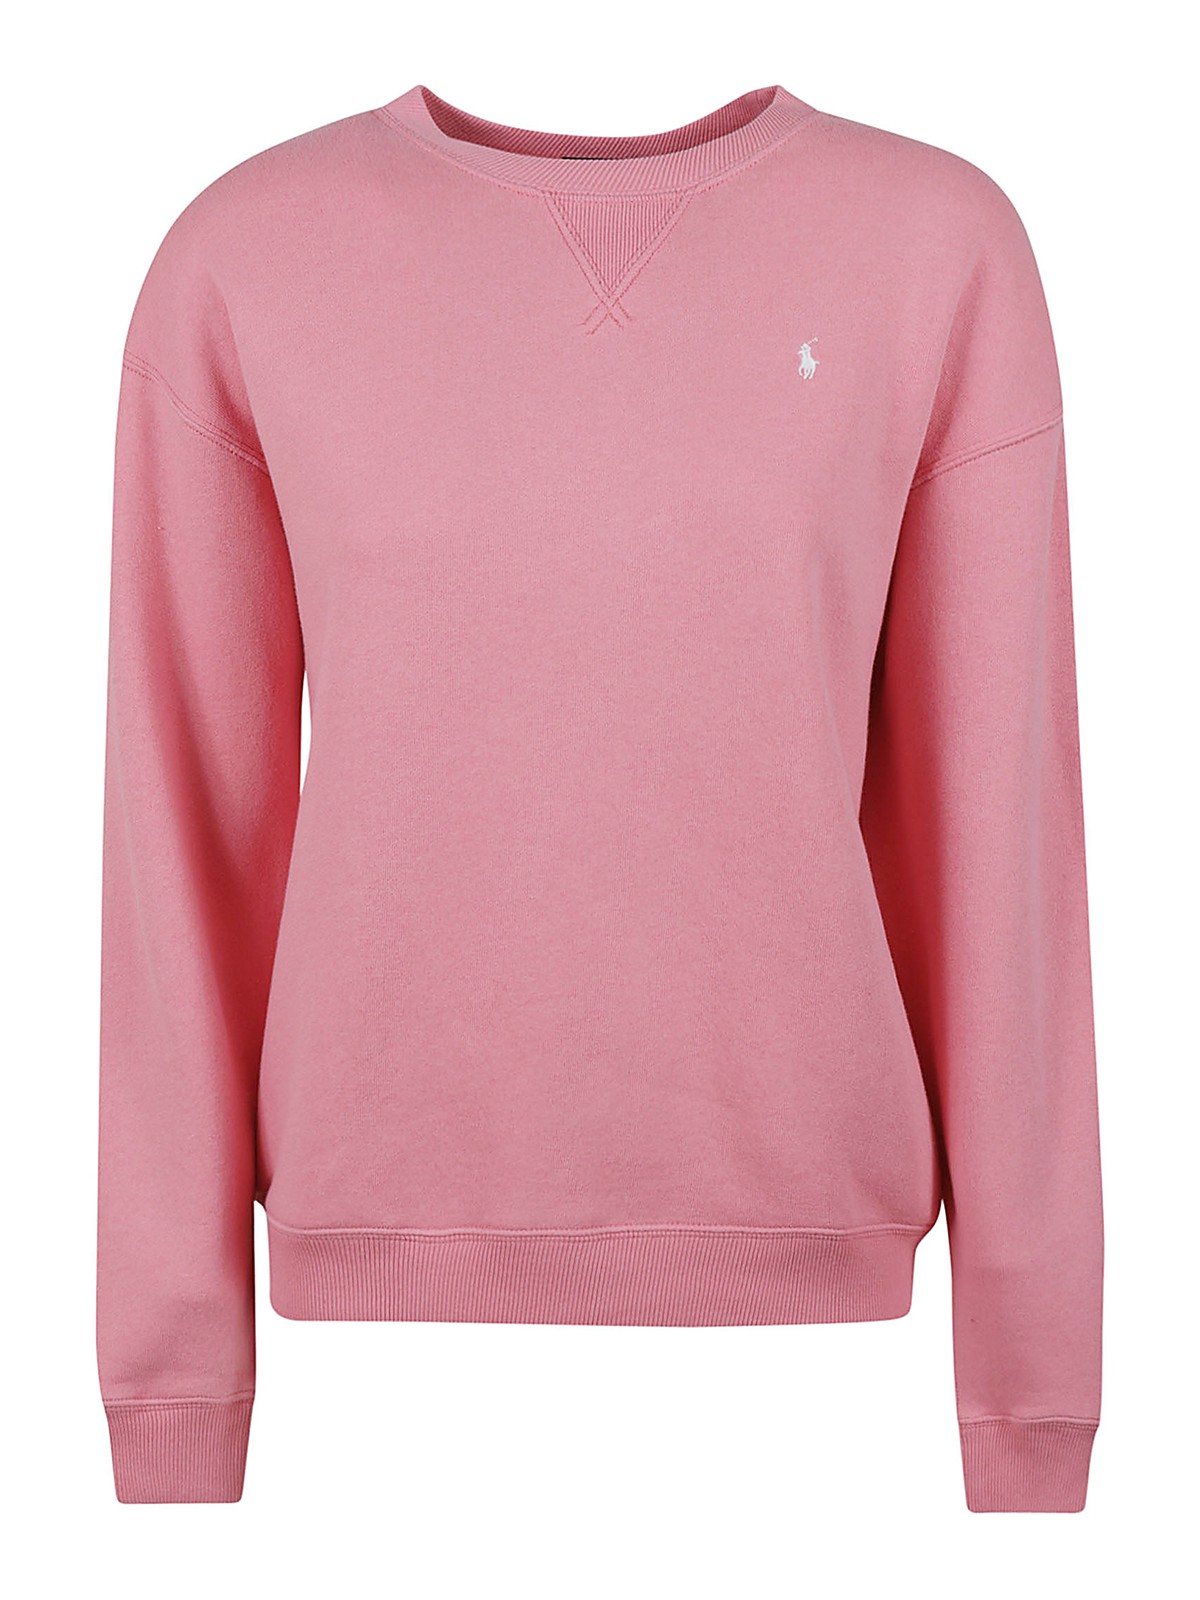 Sweatshirts & Sweaters Polo Ralph Lauren - Pink sweatshirt - 211891557007